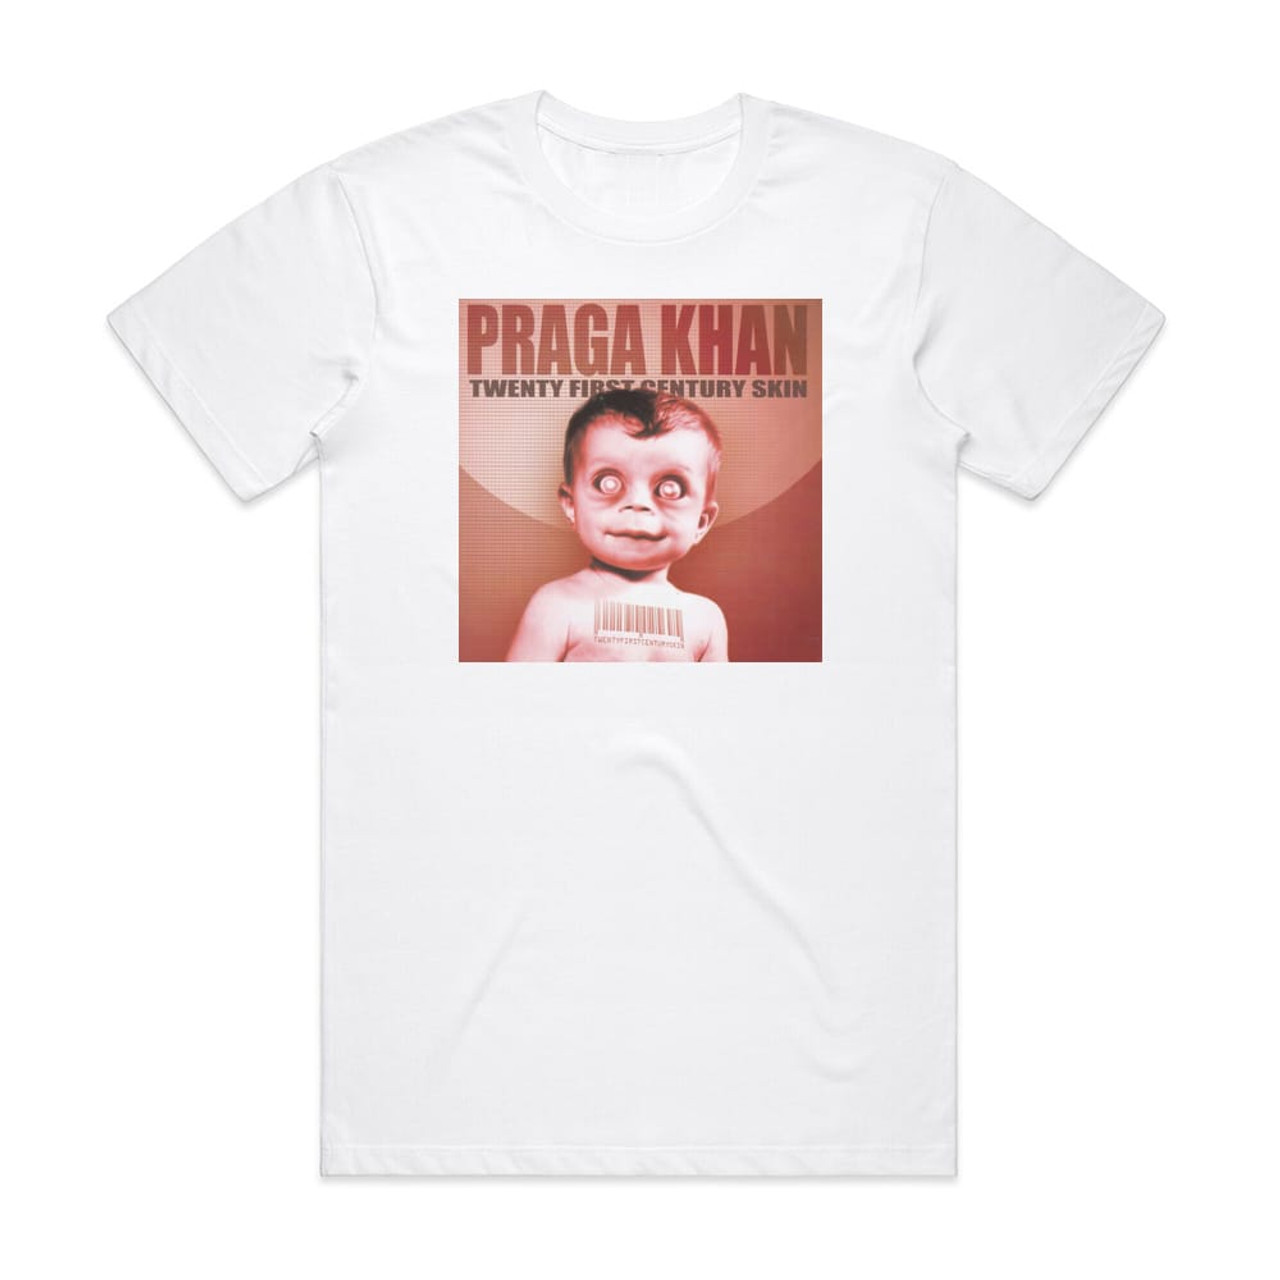 Praga Khan Twenty First Century Skin Album Cover T-Shirt White